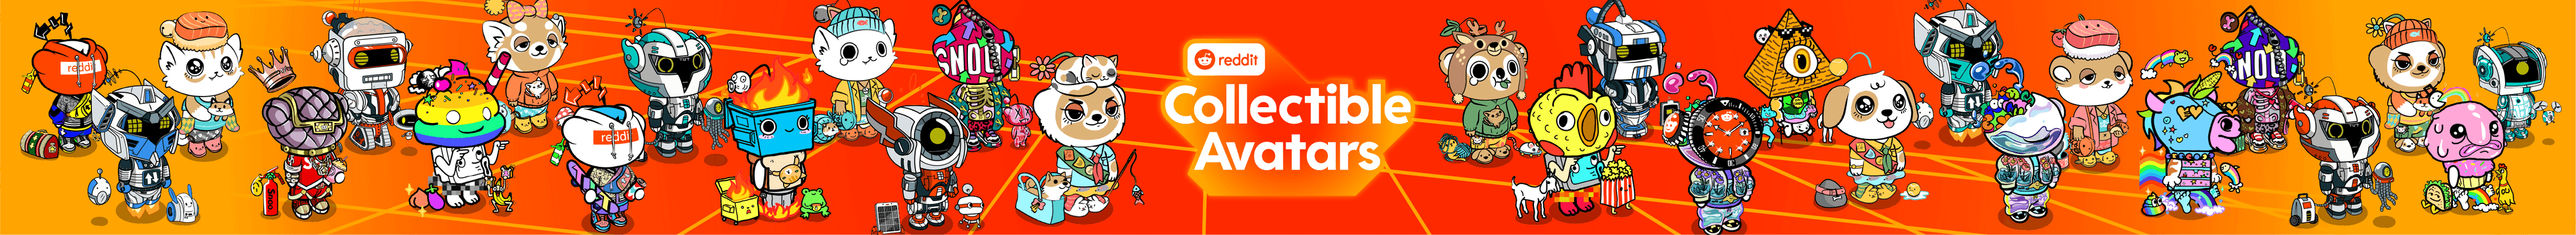 Meme Team x Reddit Collectible Avatars